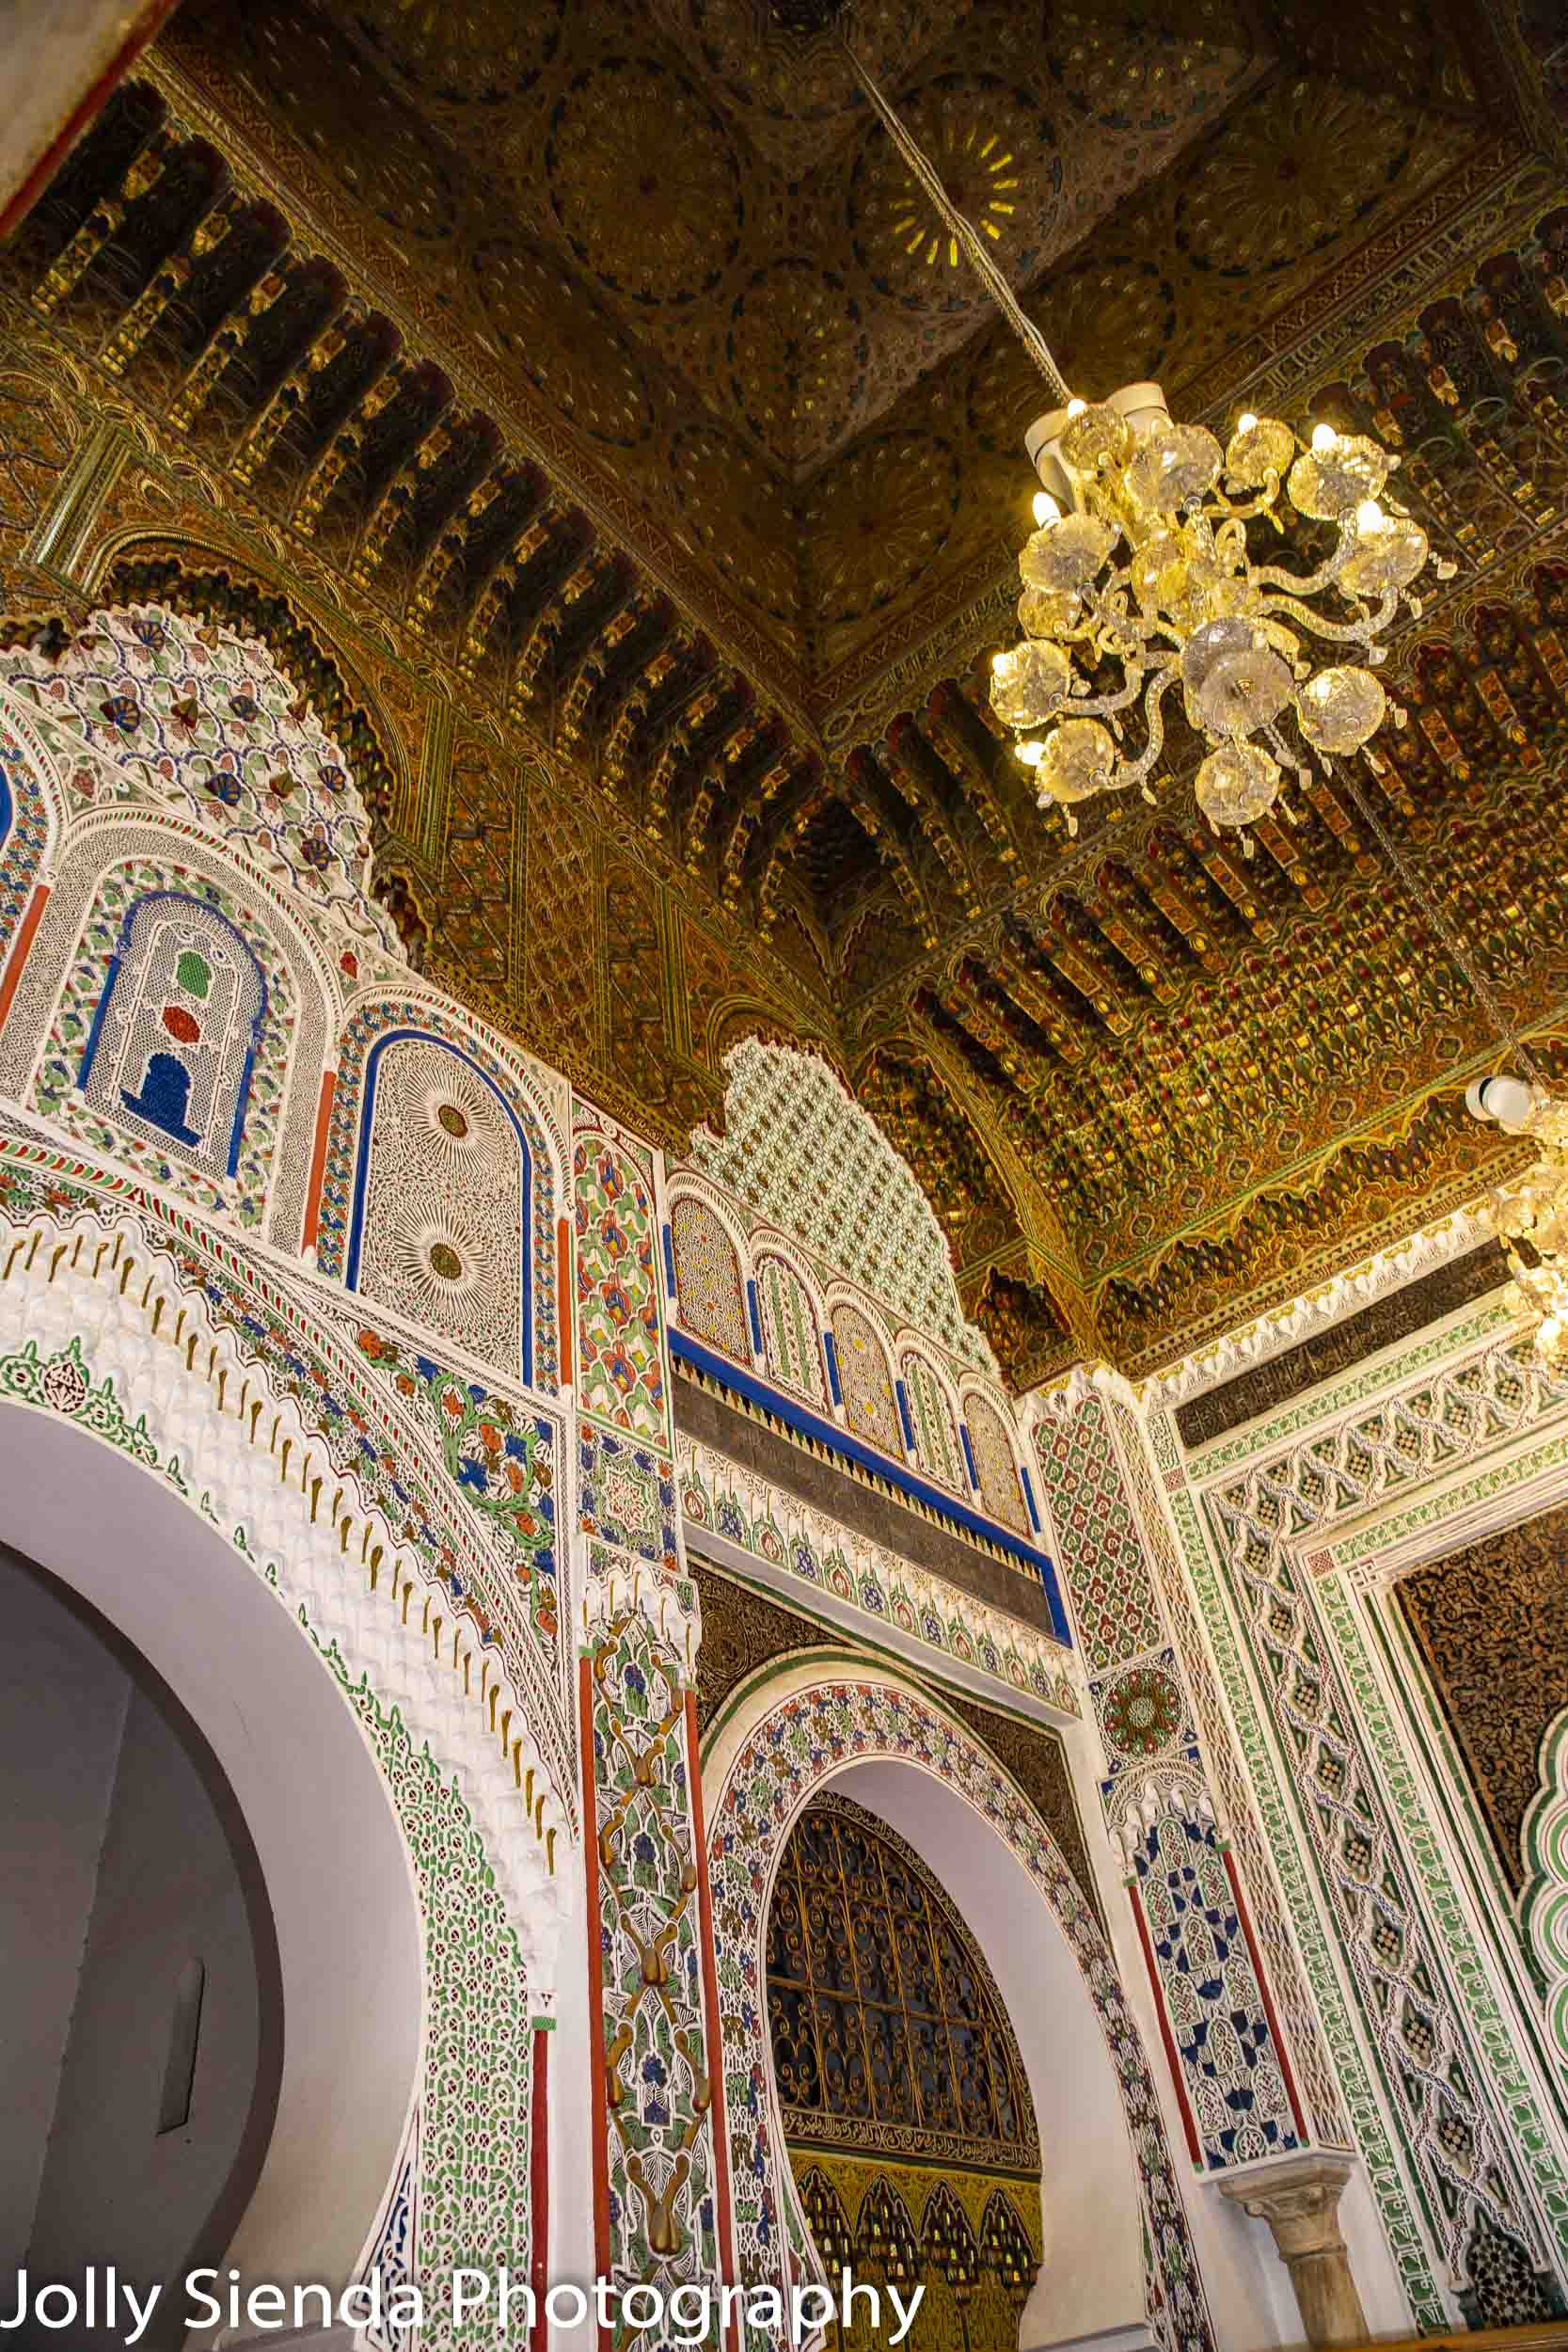 Opulent ceiling and walls at Medersa el-Attarine